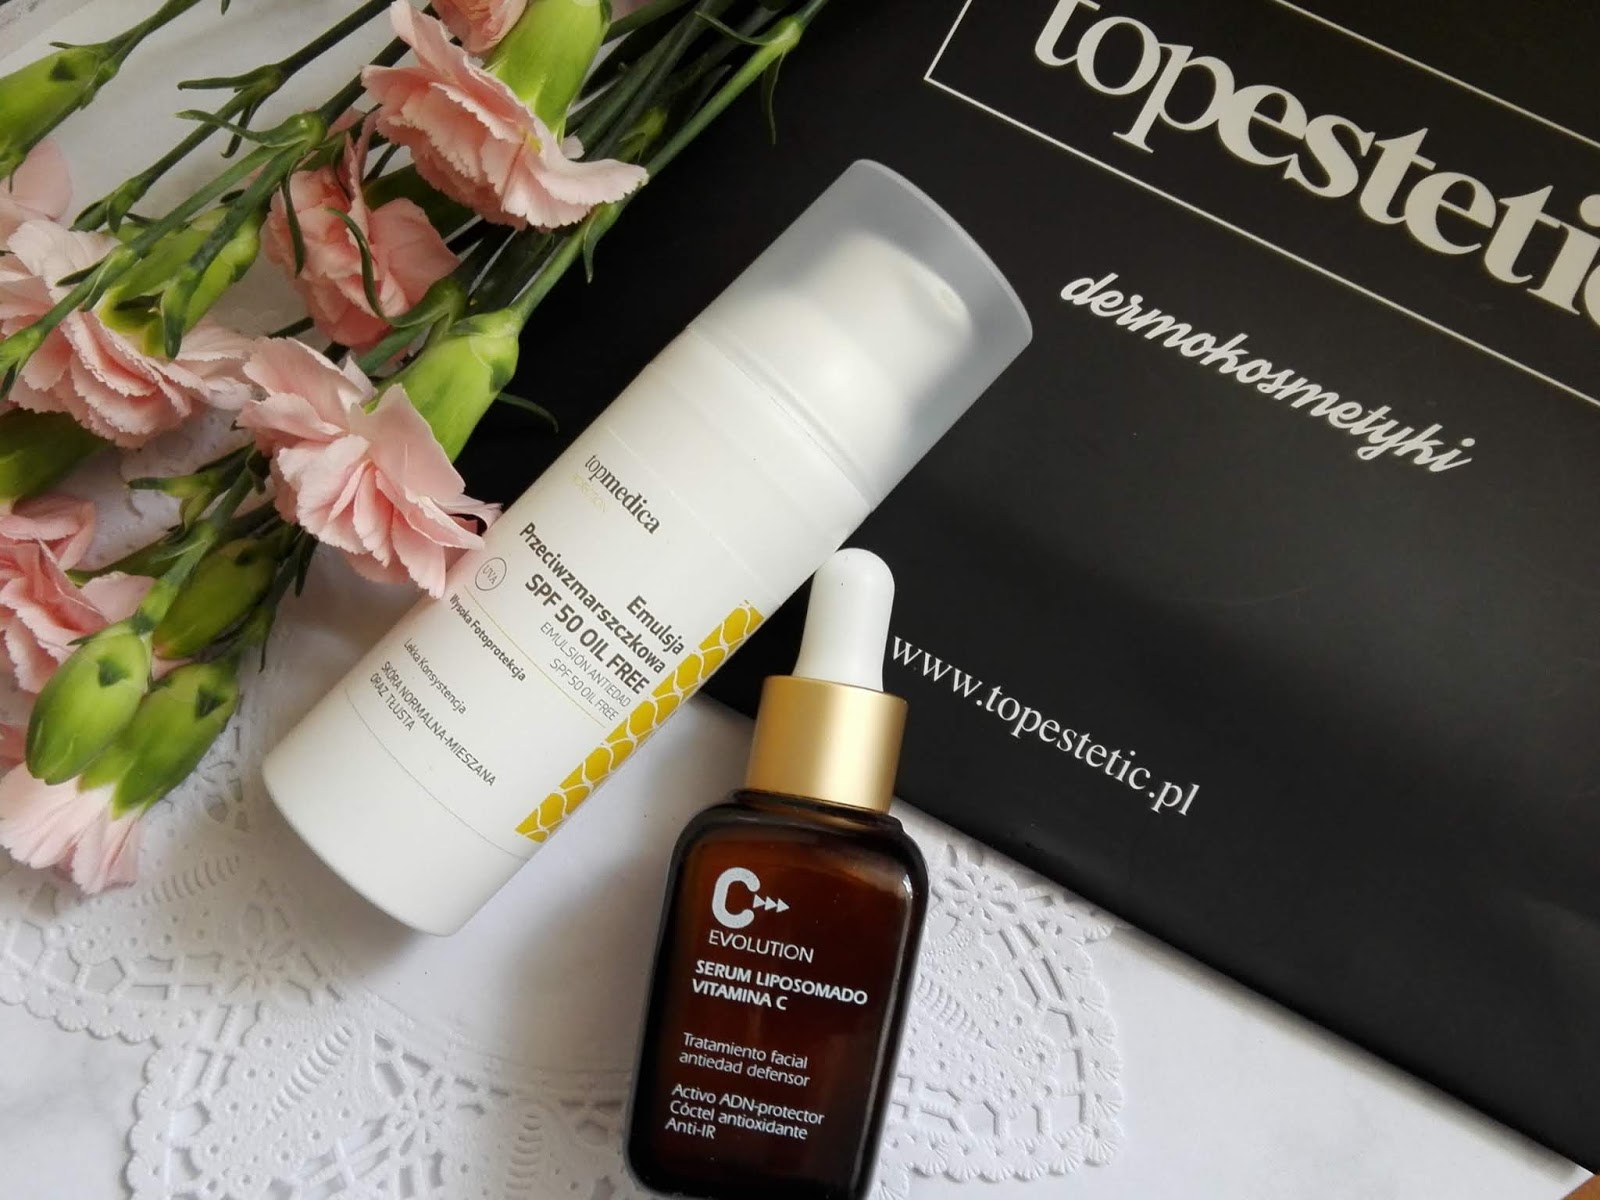 Cosmetics reviews : Letnia pielęgnacja i ochrona skóry z marką Topmedica